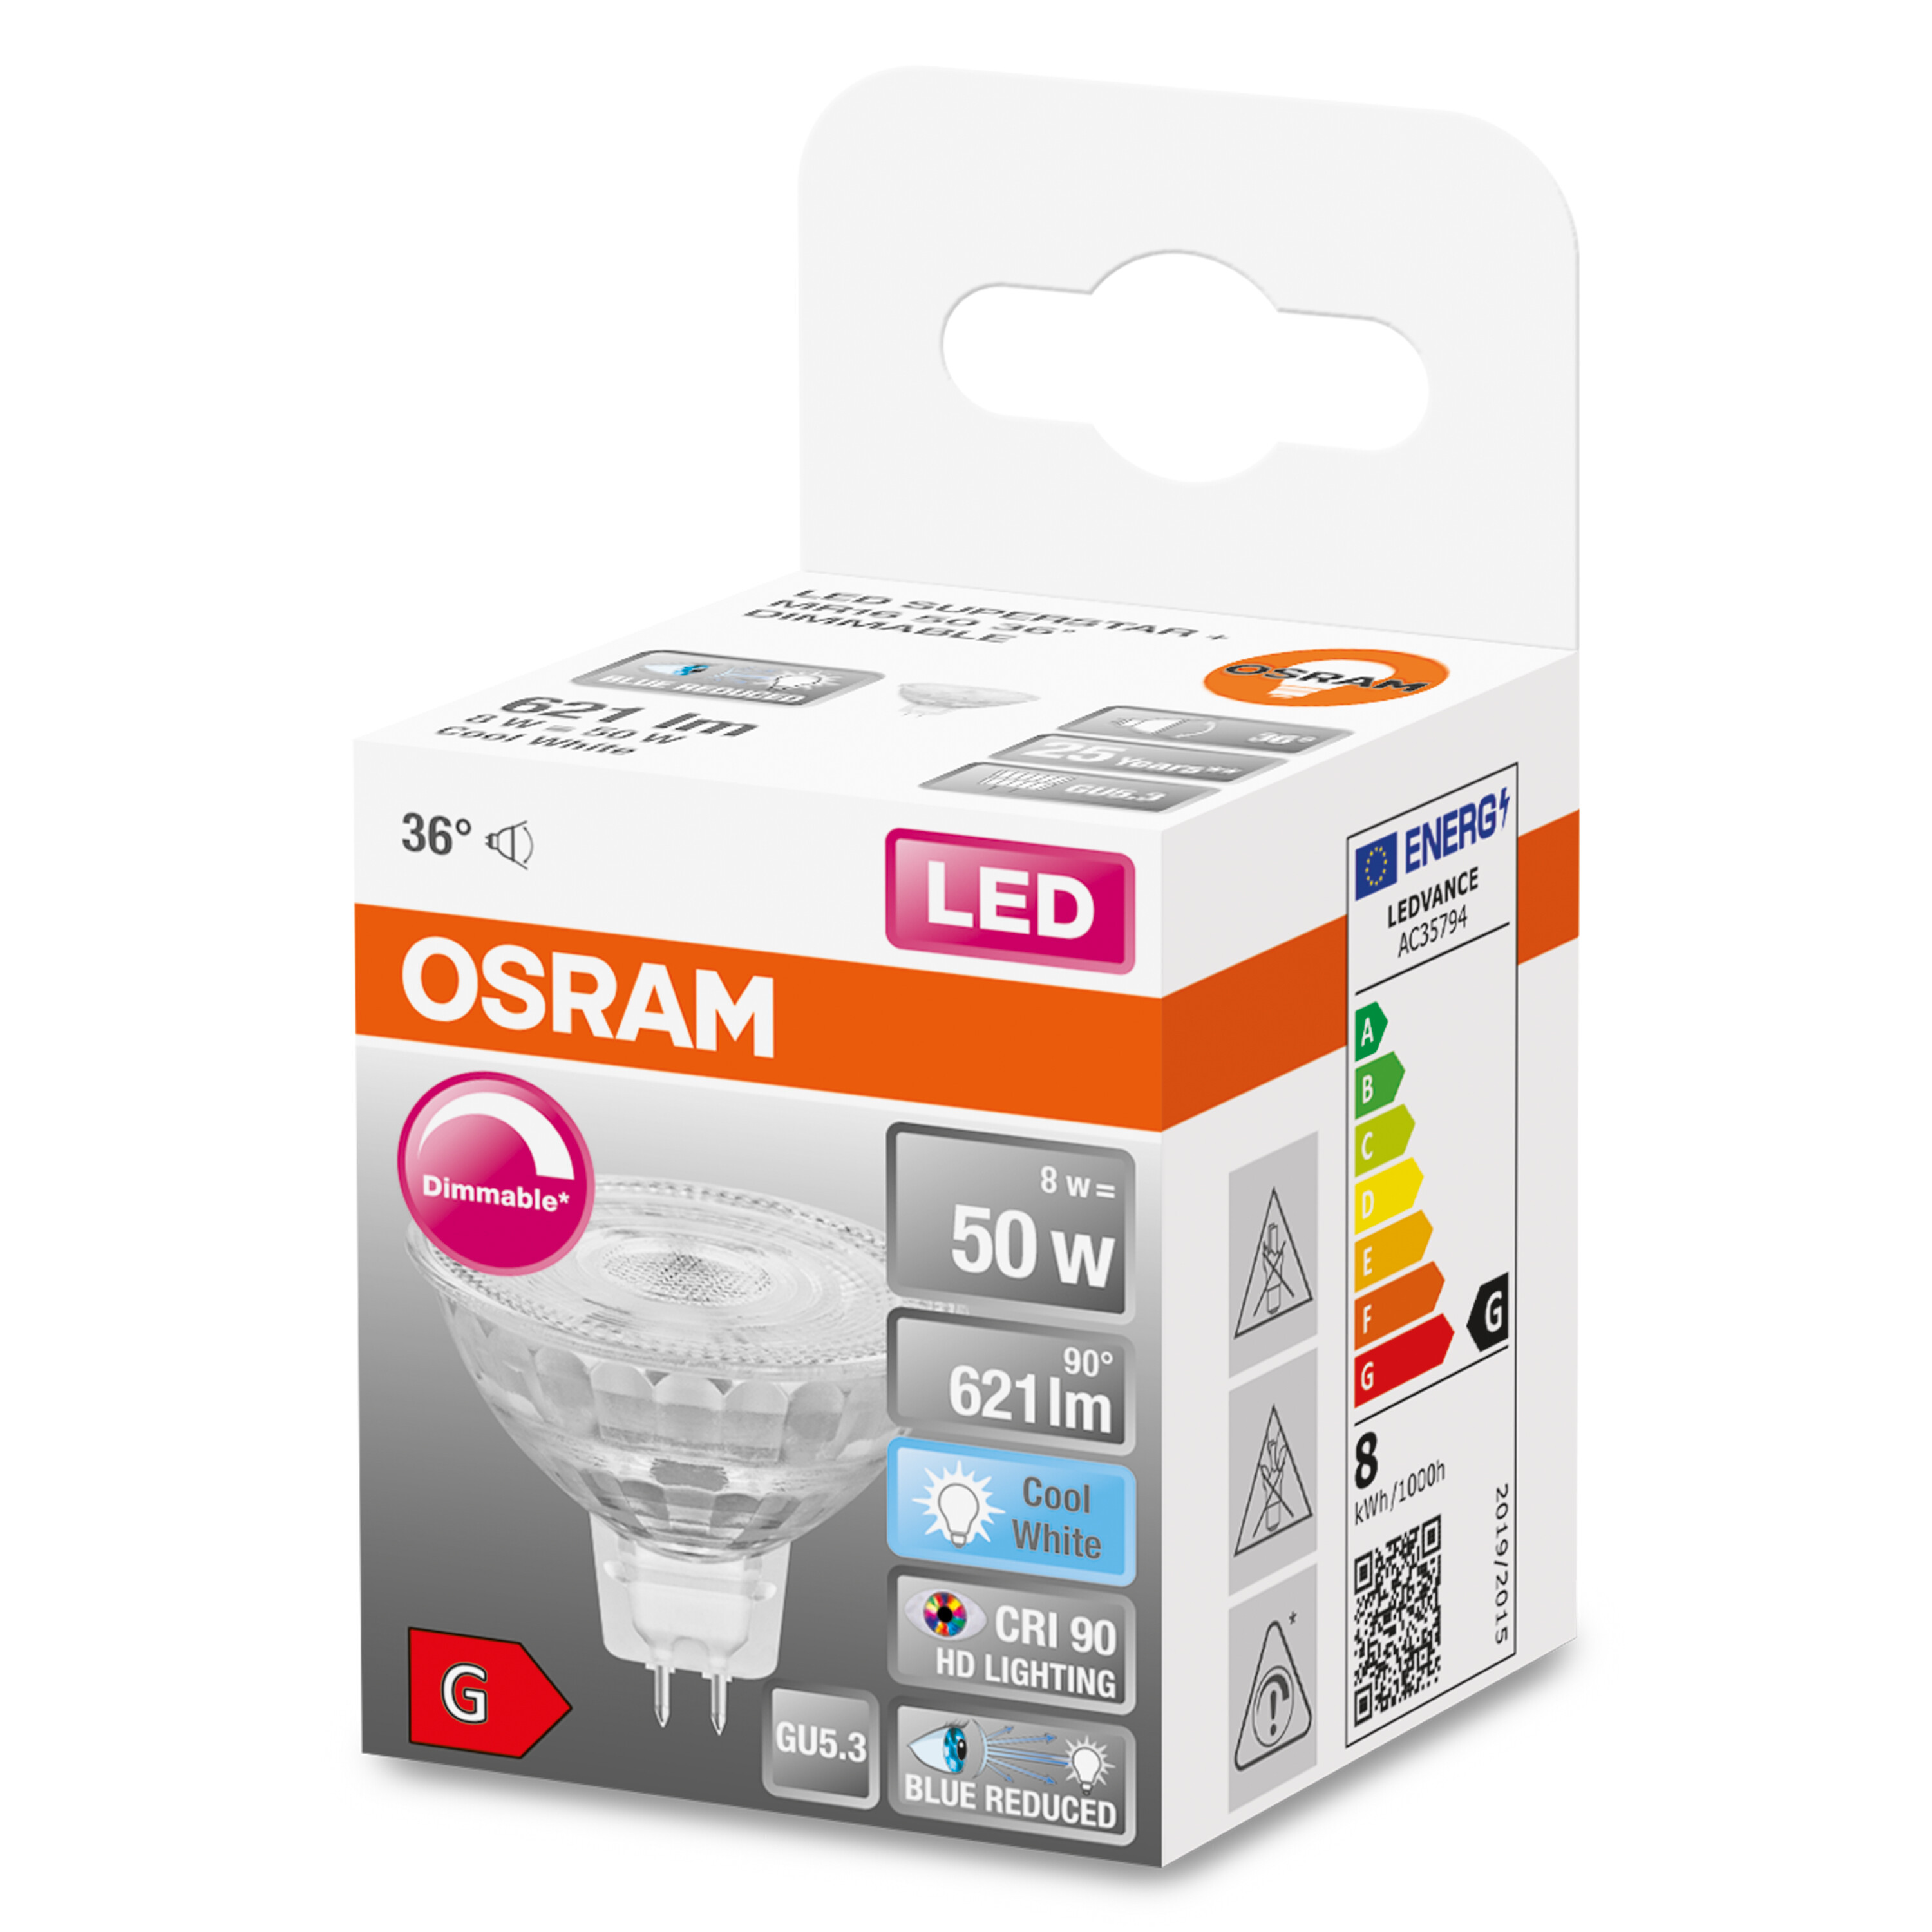 OSRAM  PLUS LED MR16 Reflektor-Lampe Kaltweiß LED Lumen 621 SUPERSTAR